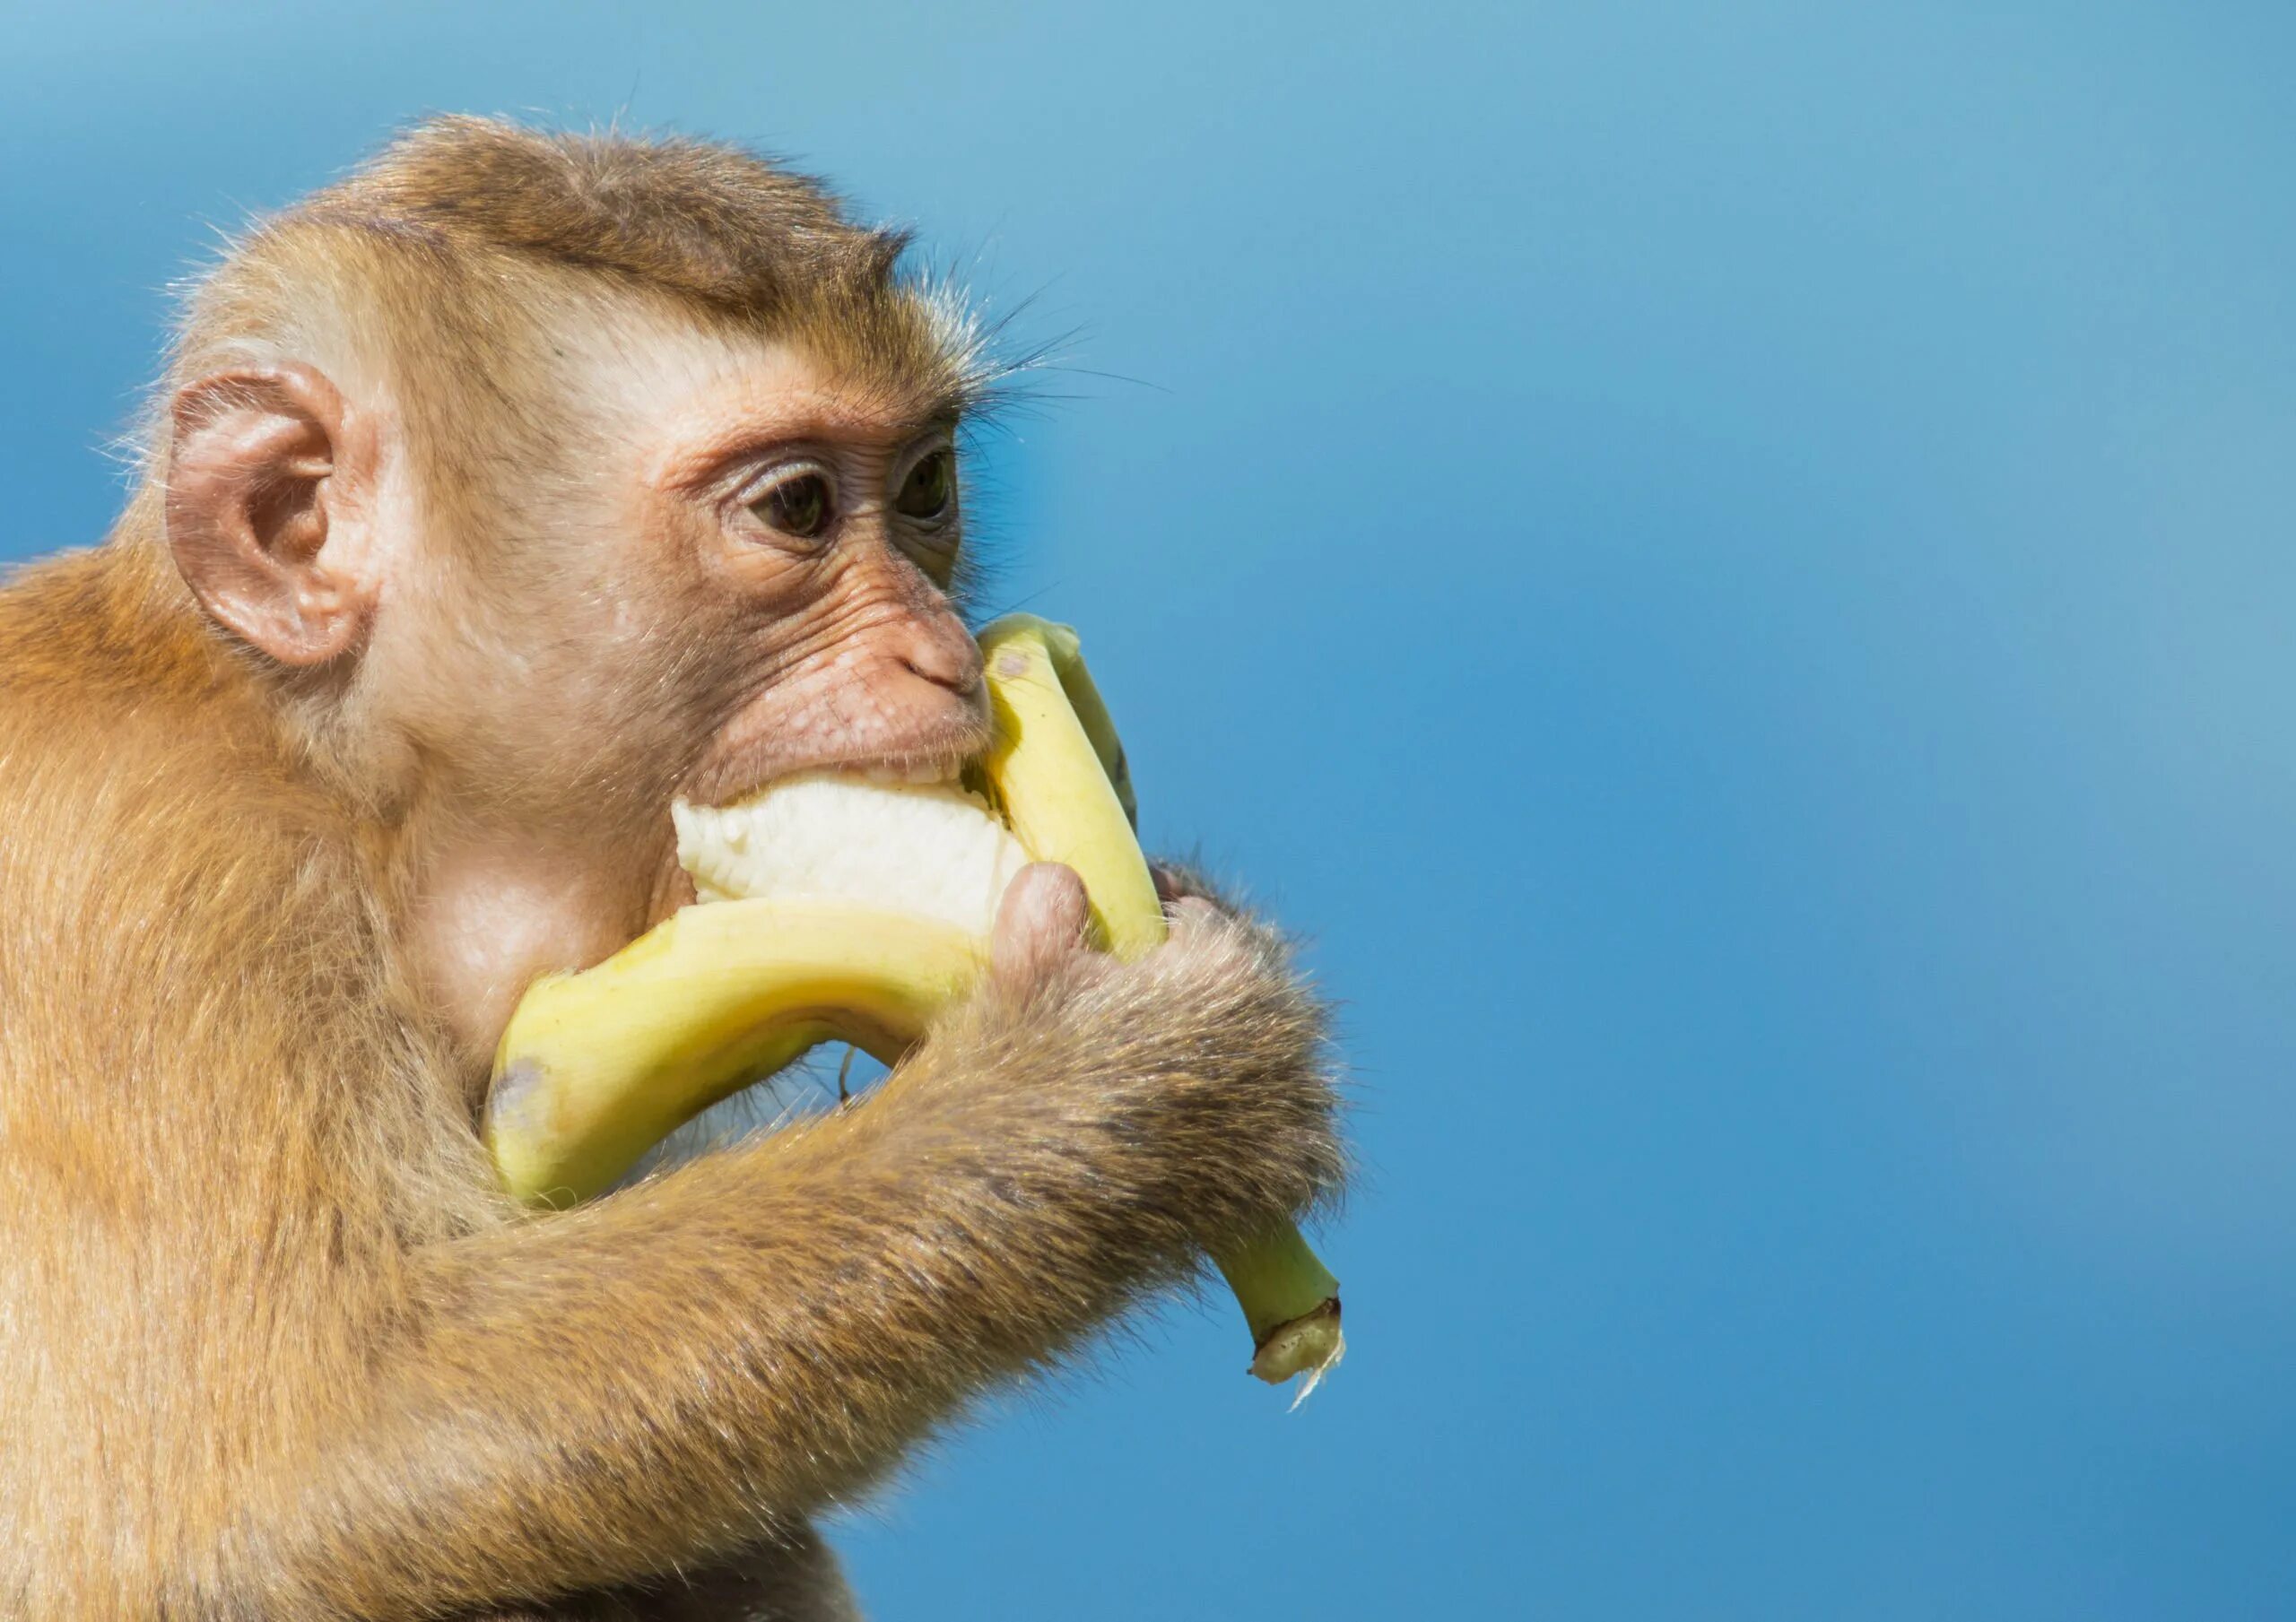 От улыбки обезьяна подавилася бананом. Макака с бананом. Обезьяна кушает банан. J,tpmzyf c ,fuyfyfvb. Фото обезьяны с бананом.